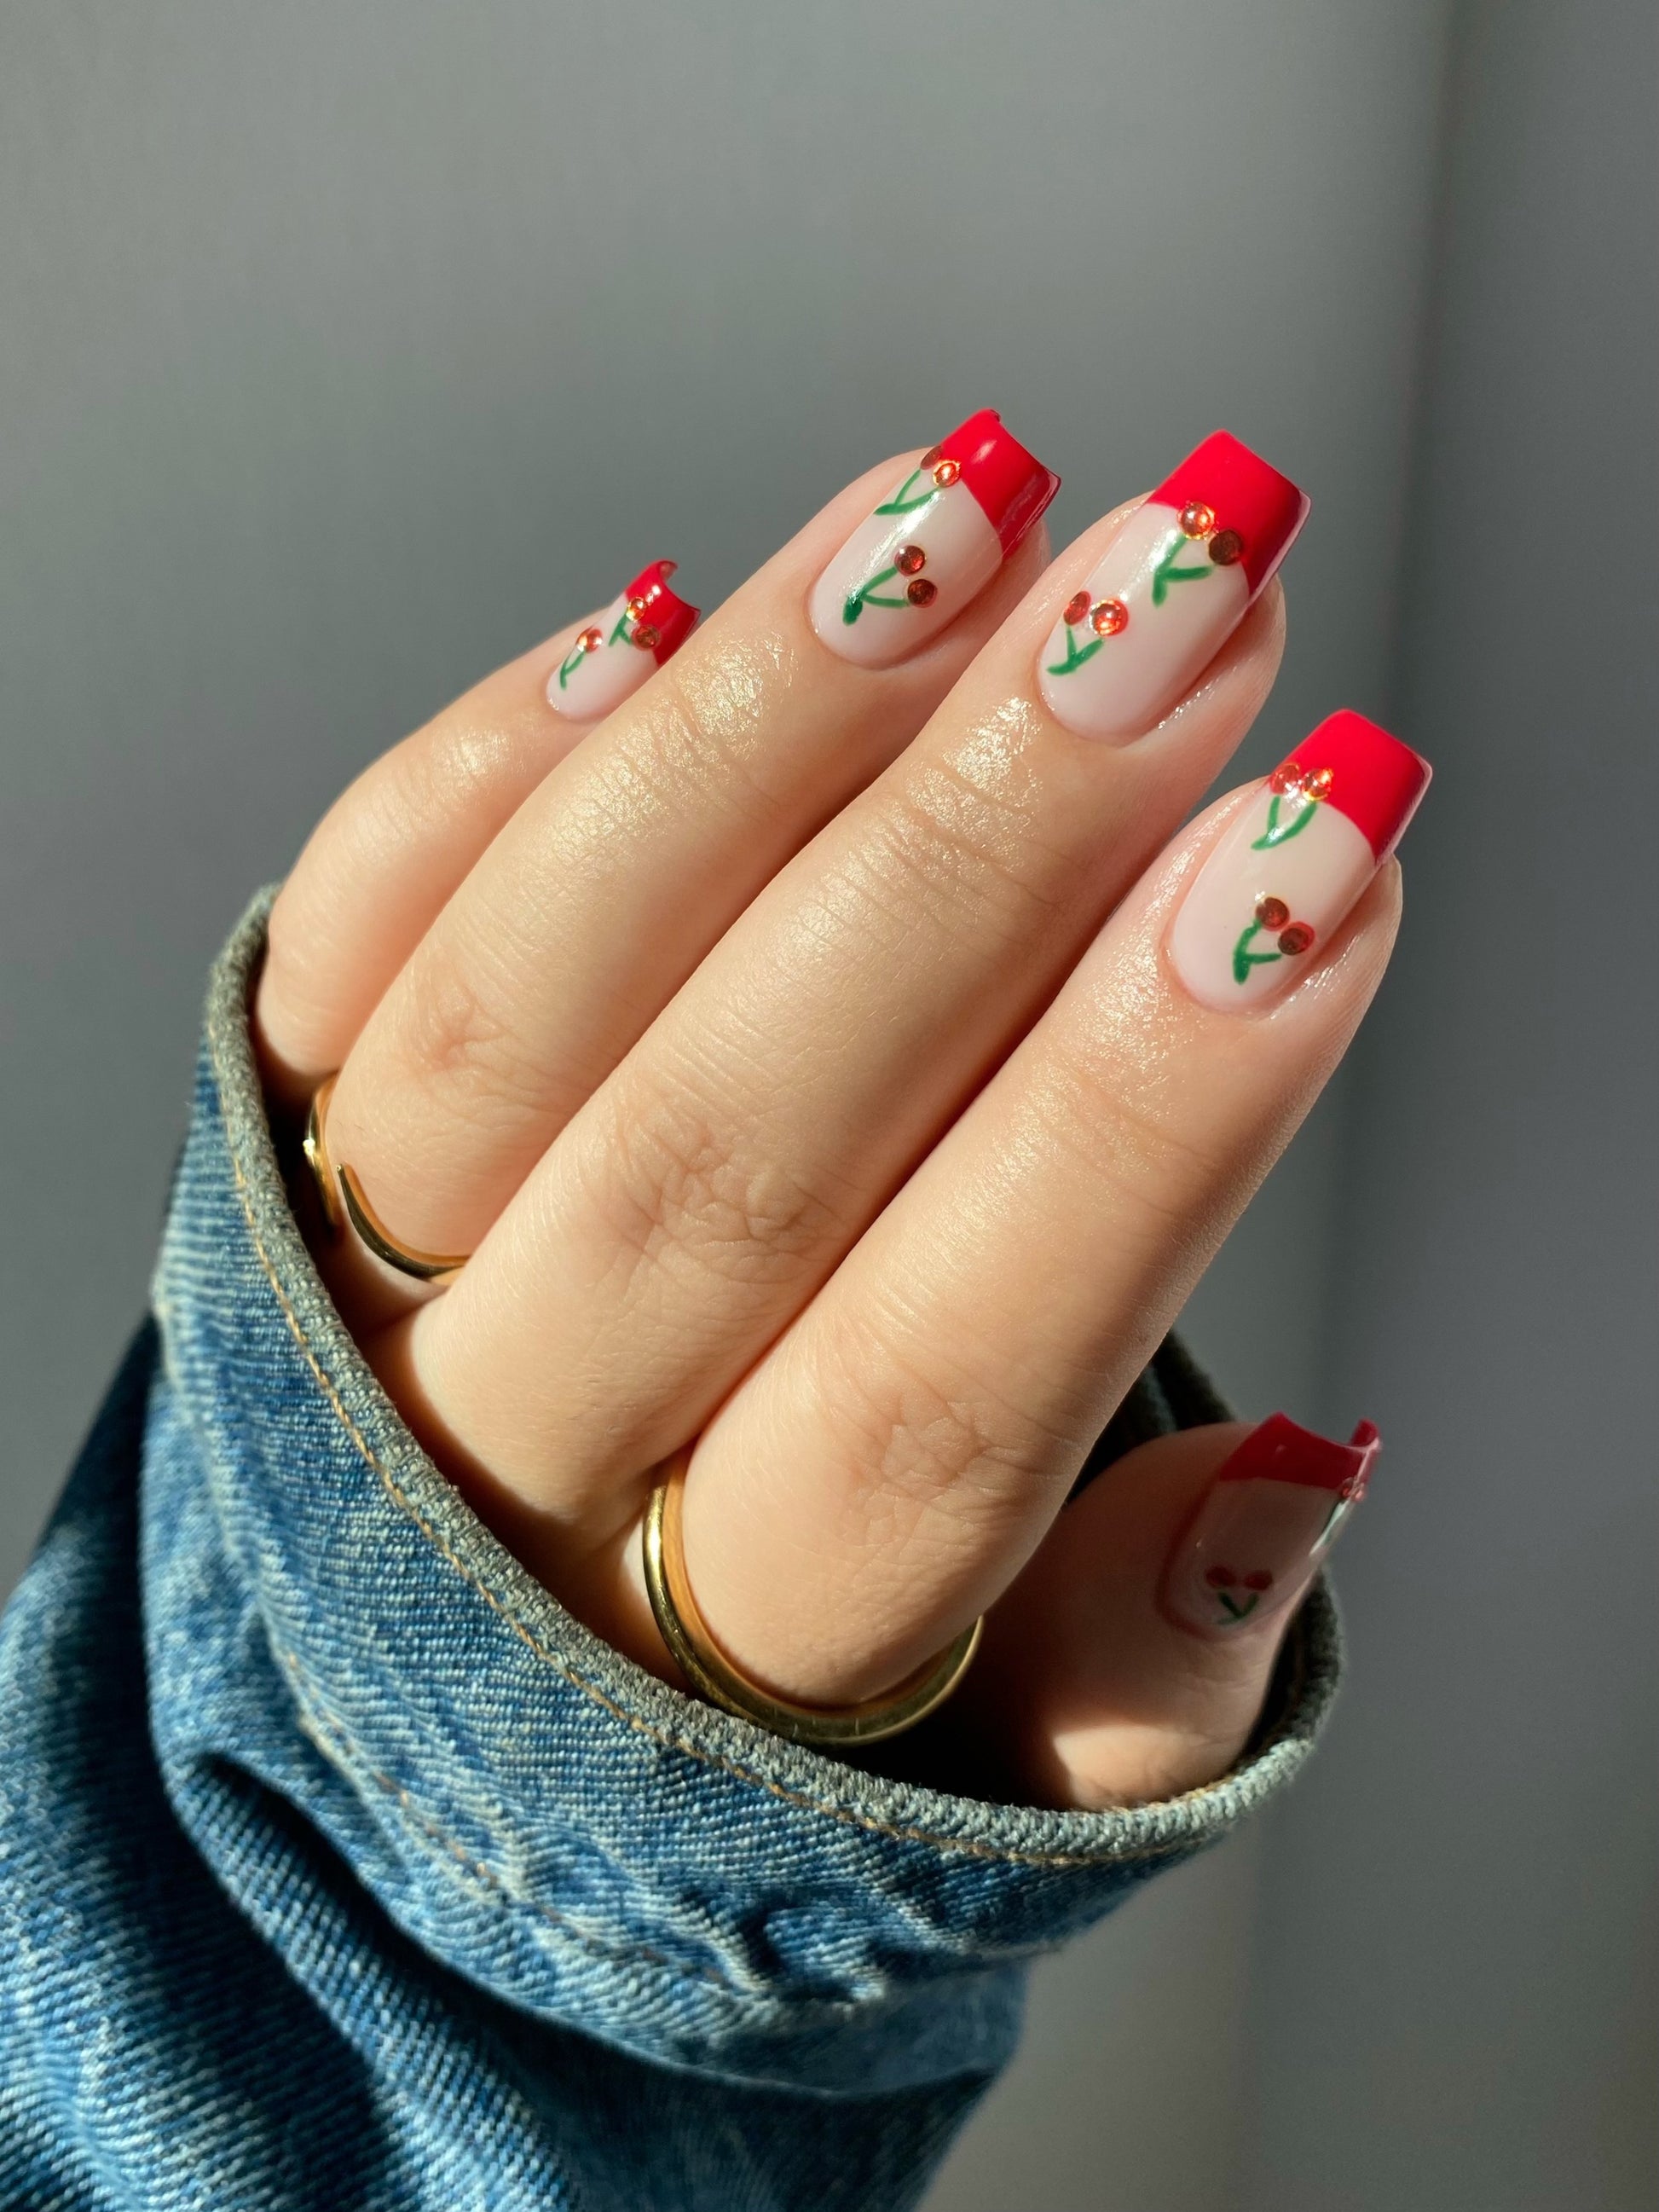 Cherry gem nails by @kathatrillion